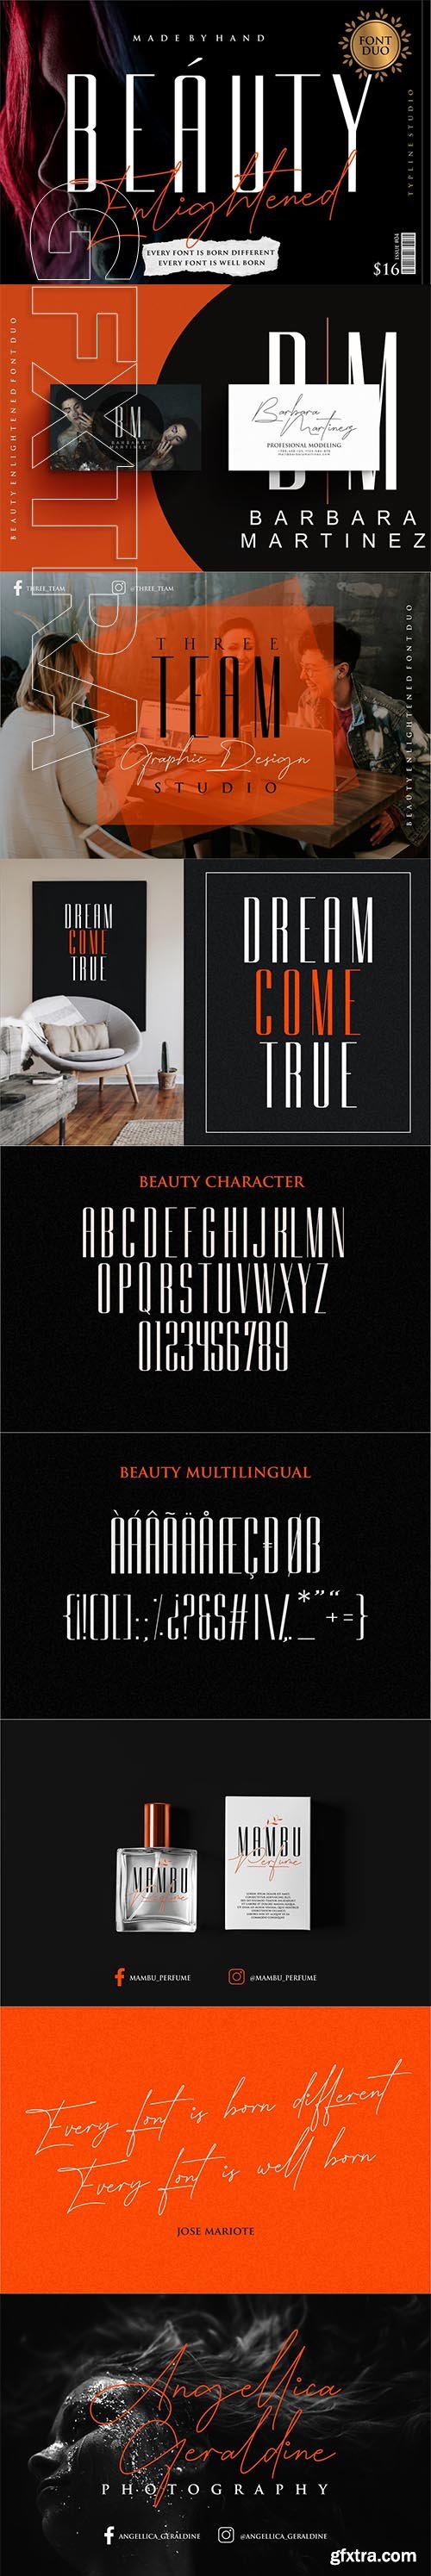 CreativeMarket - Beauty Enlightened New Duo 3611501